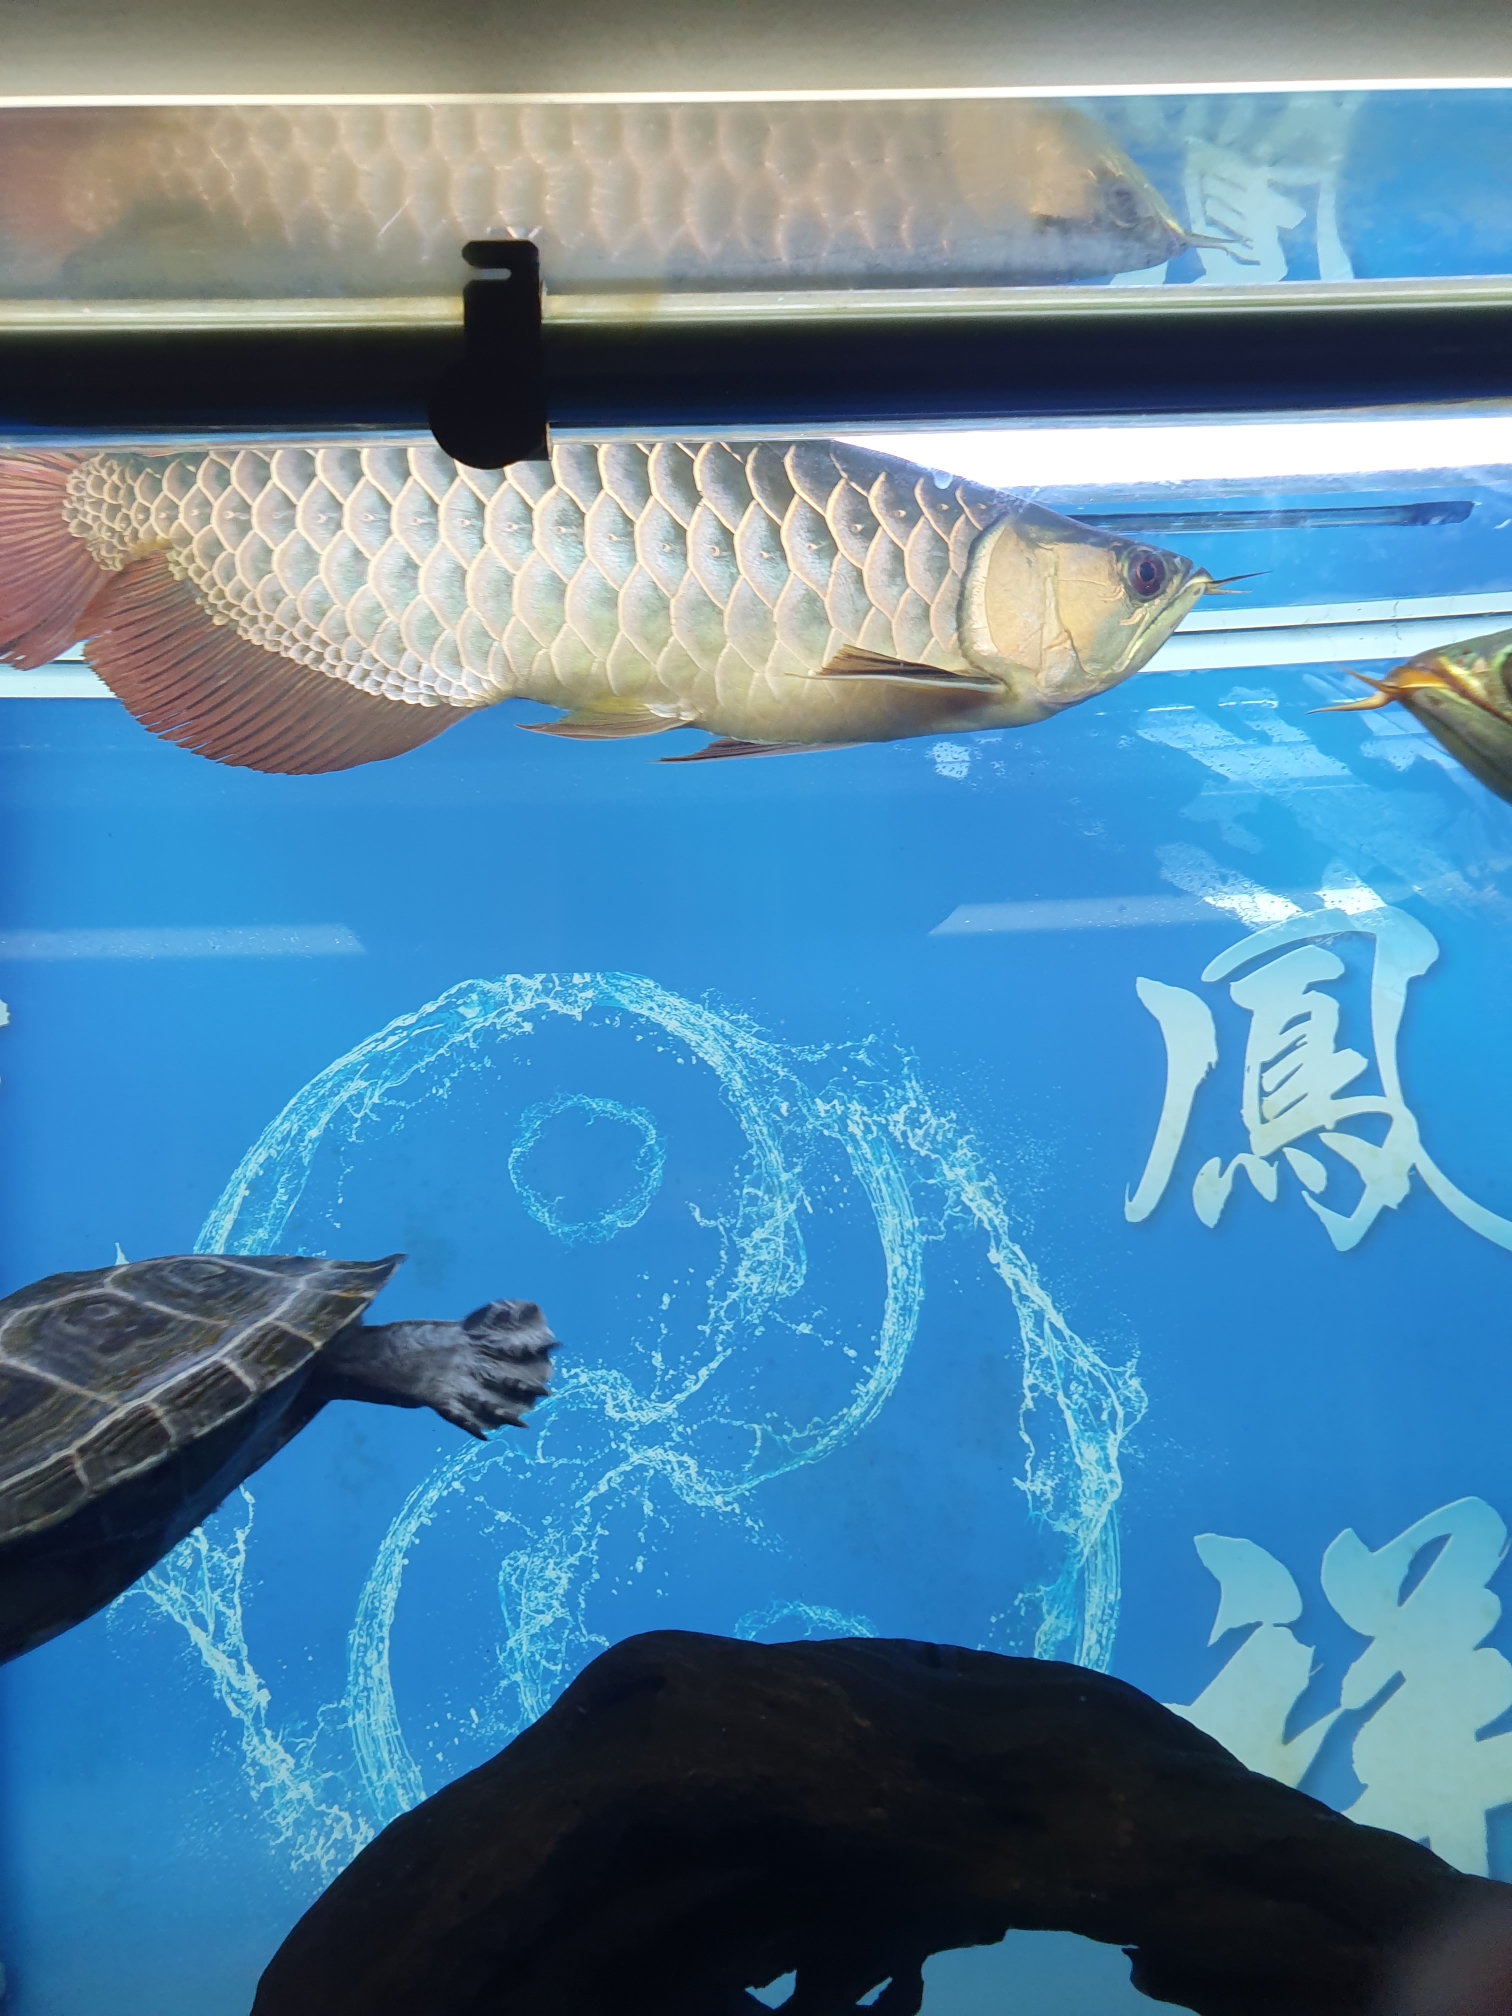 September - Chongyang climbing polyculture fish a year and a half of study leave Siam giant carp (national treasure) ASIAN AROWANA,AROWANA,STINGRAY The4sheet